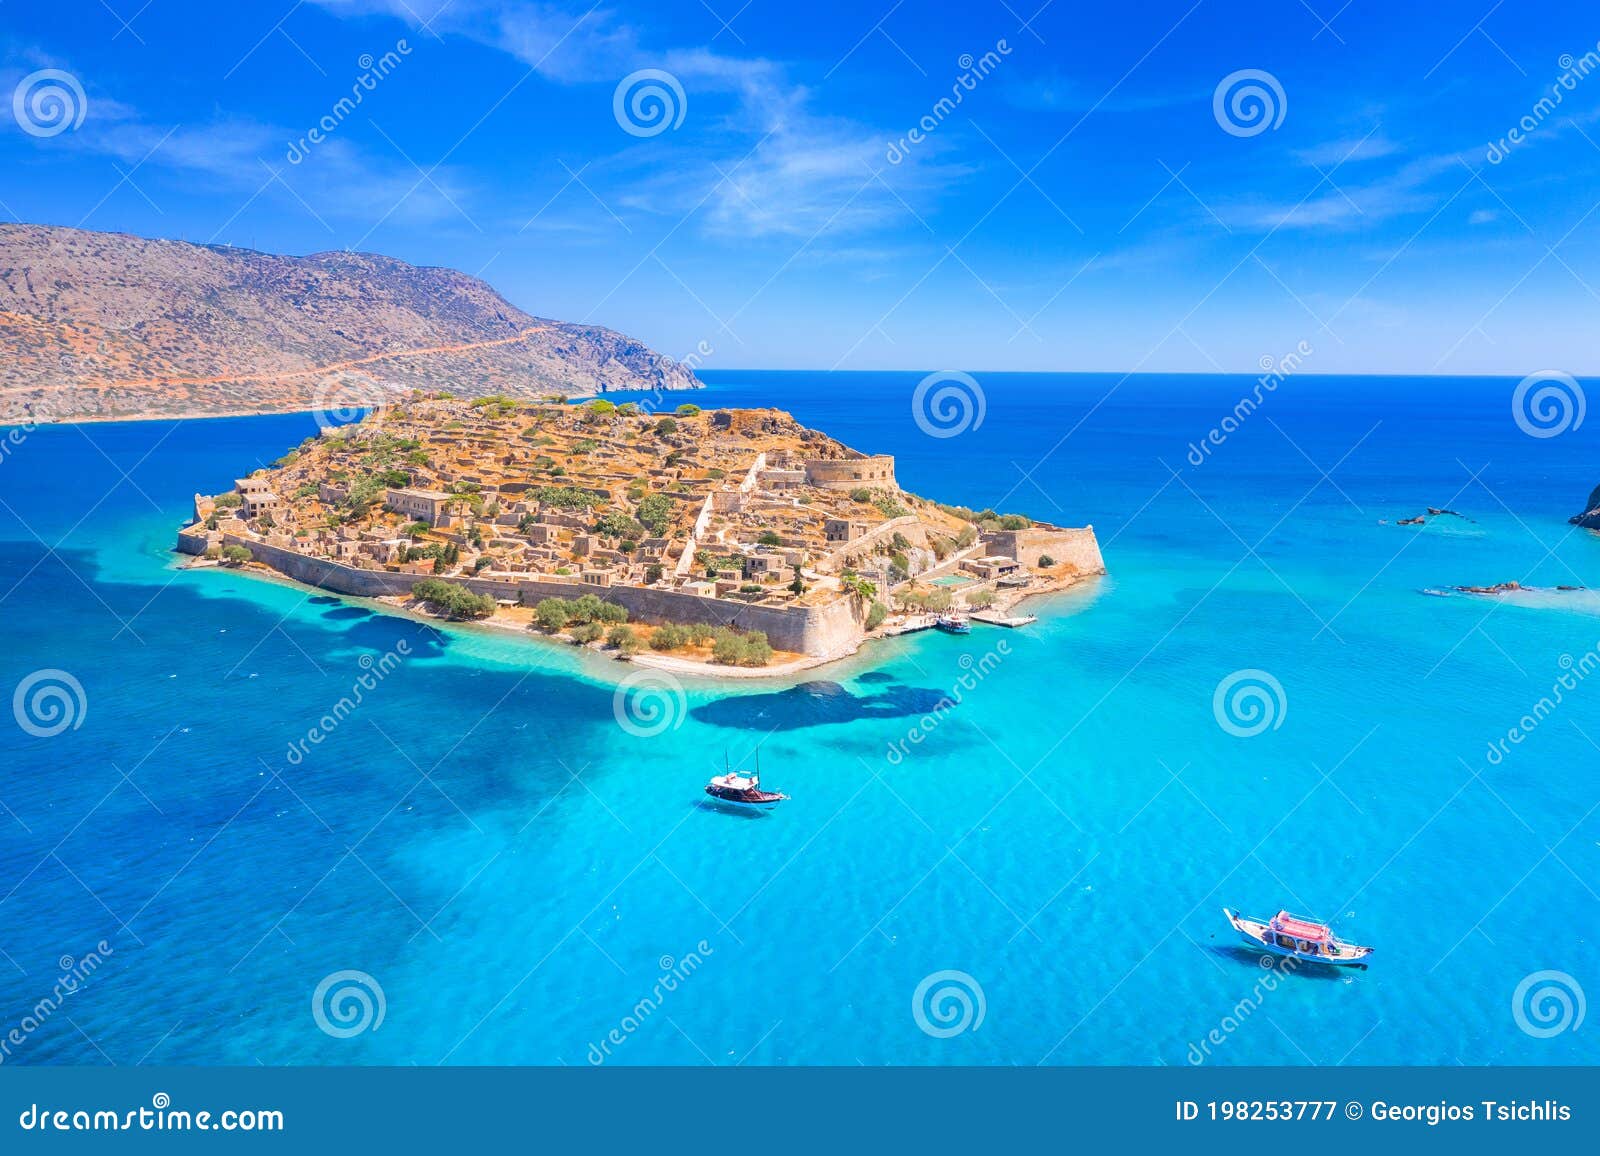 view of the island of spinalonga island, elounda, crete, greece.